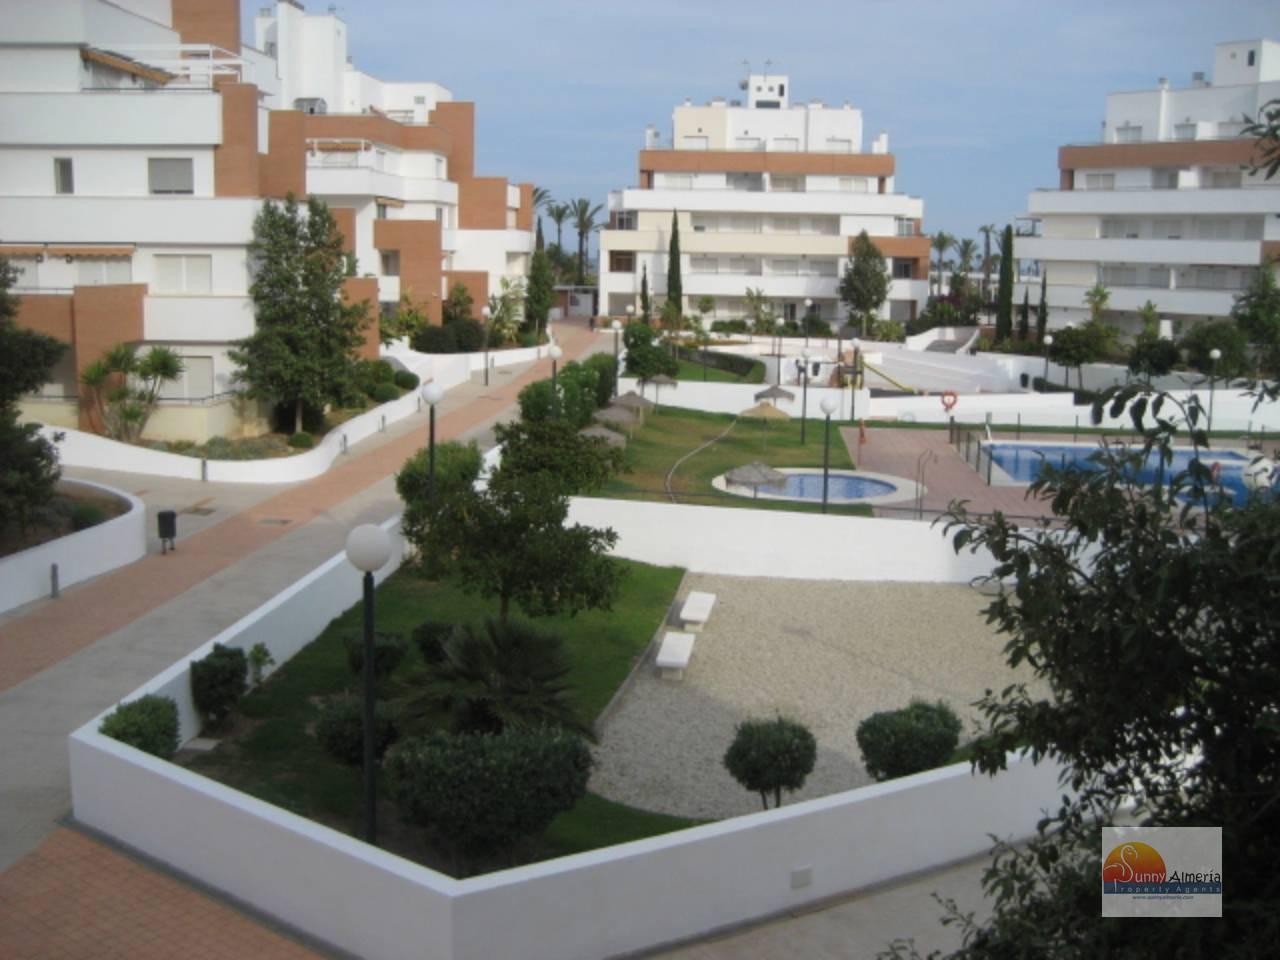 Apartment for sale in Carretera Ciudad de Cadiz 1A (Roquetas de Mar), 180.000 €